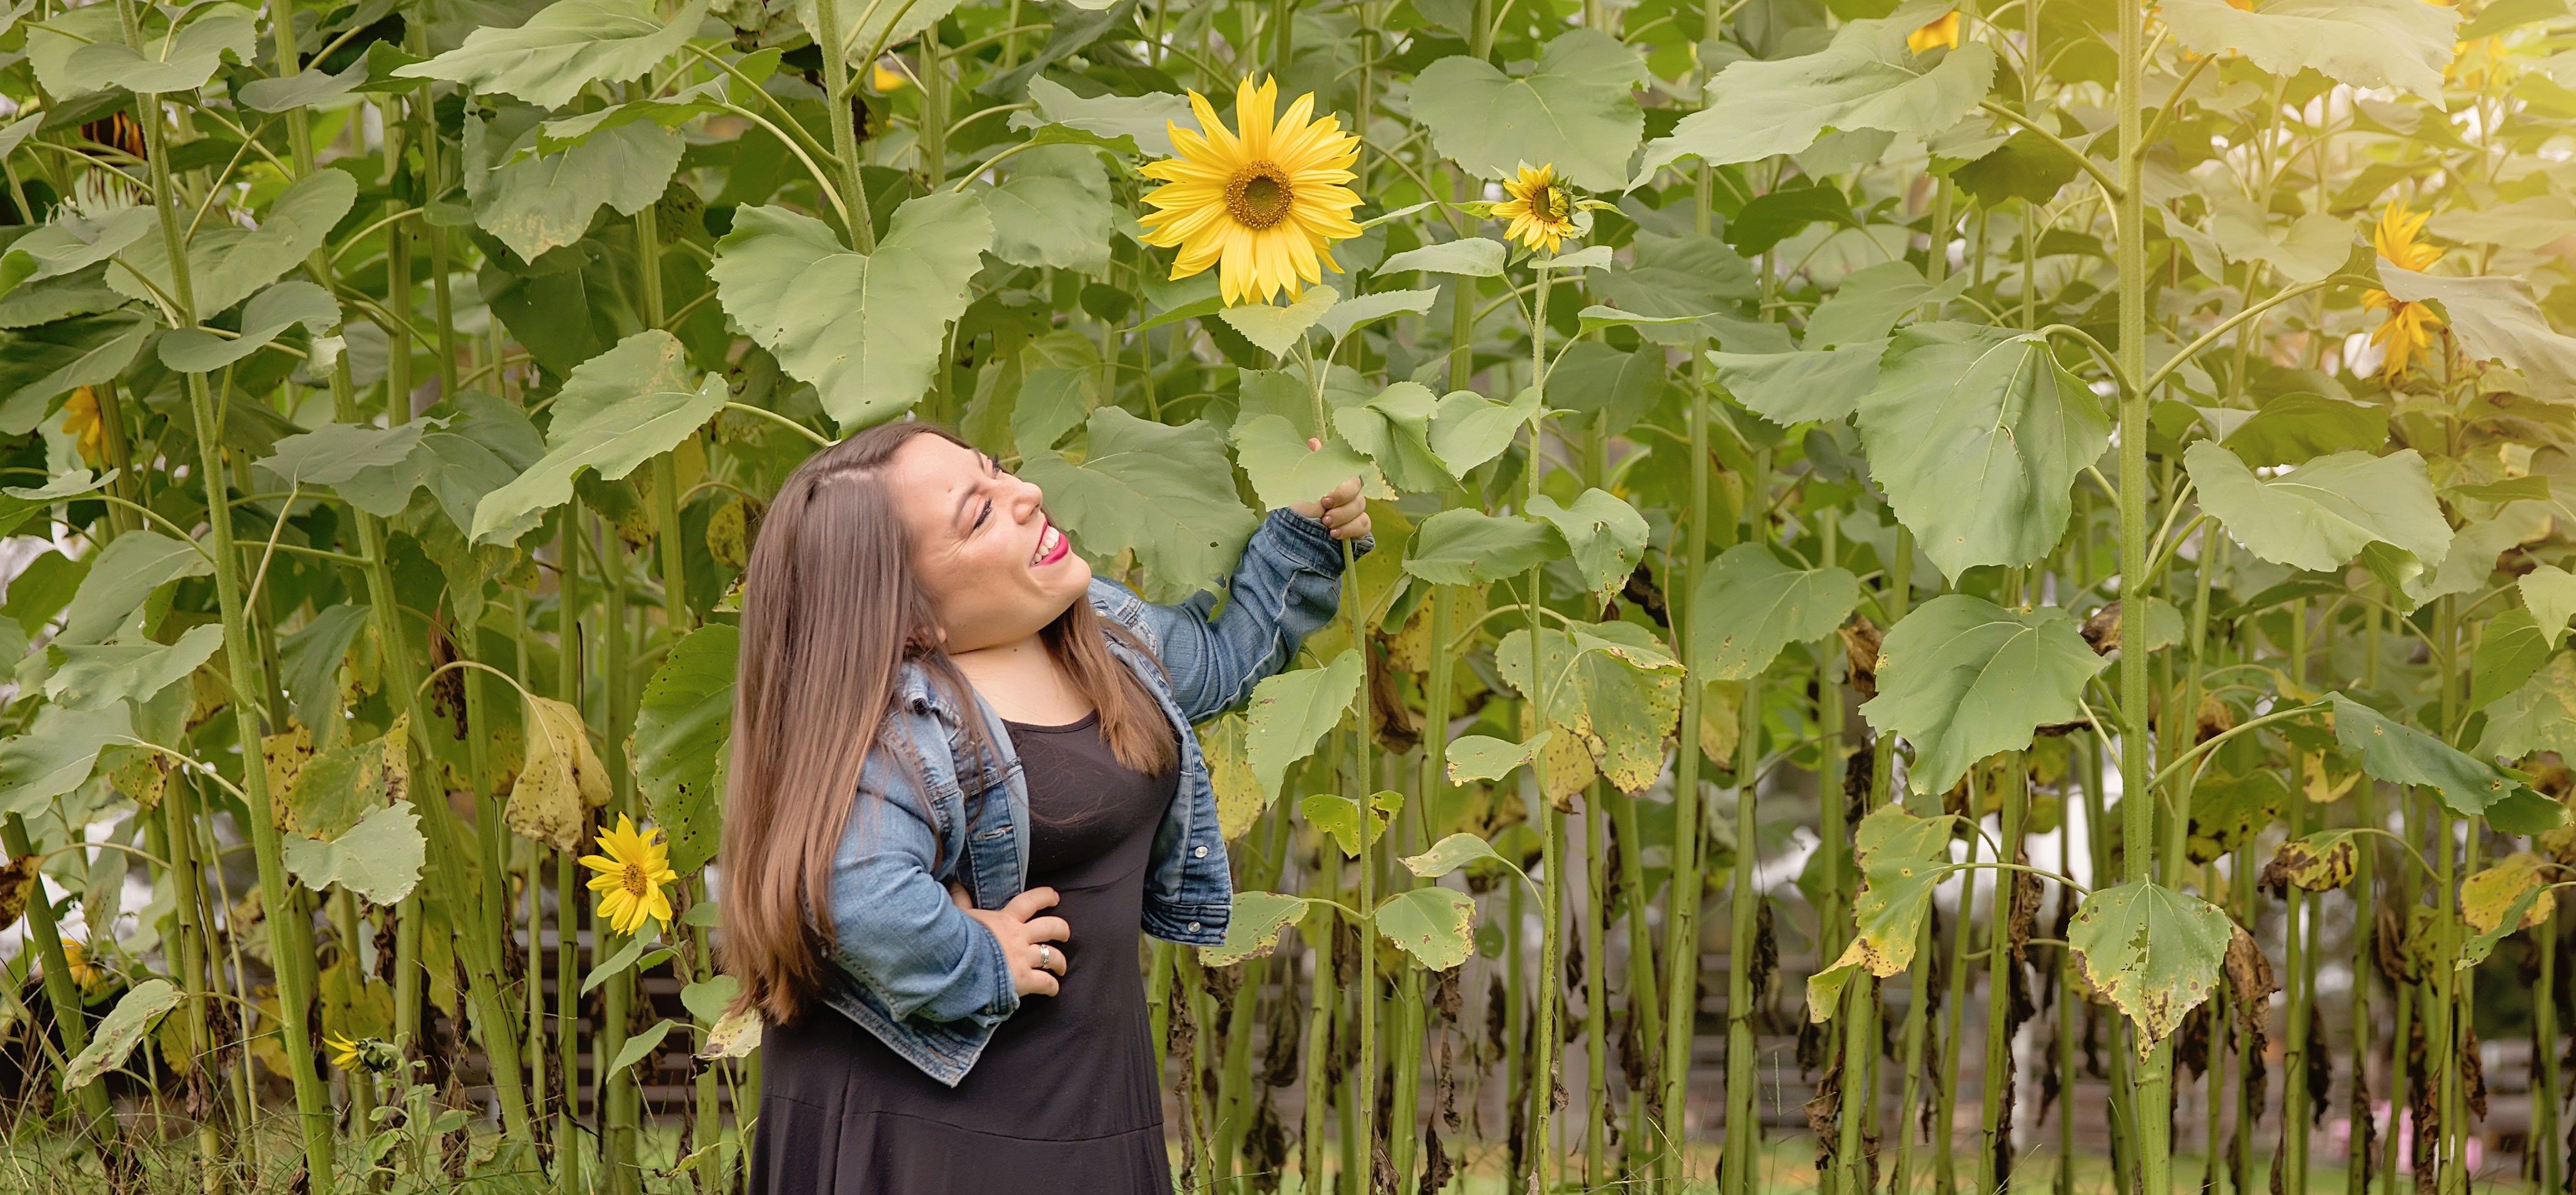 Mackenzie smelling a sunflower.